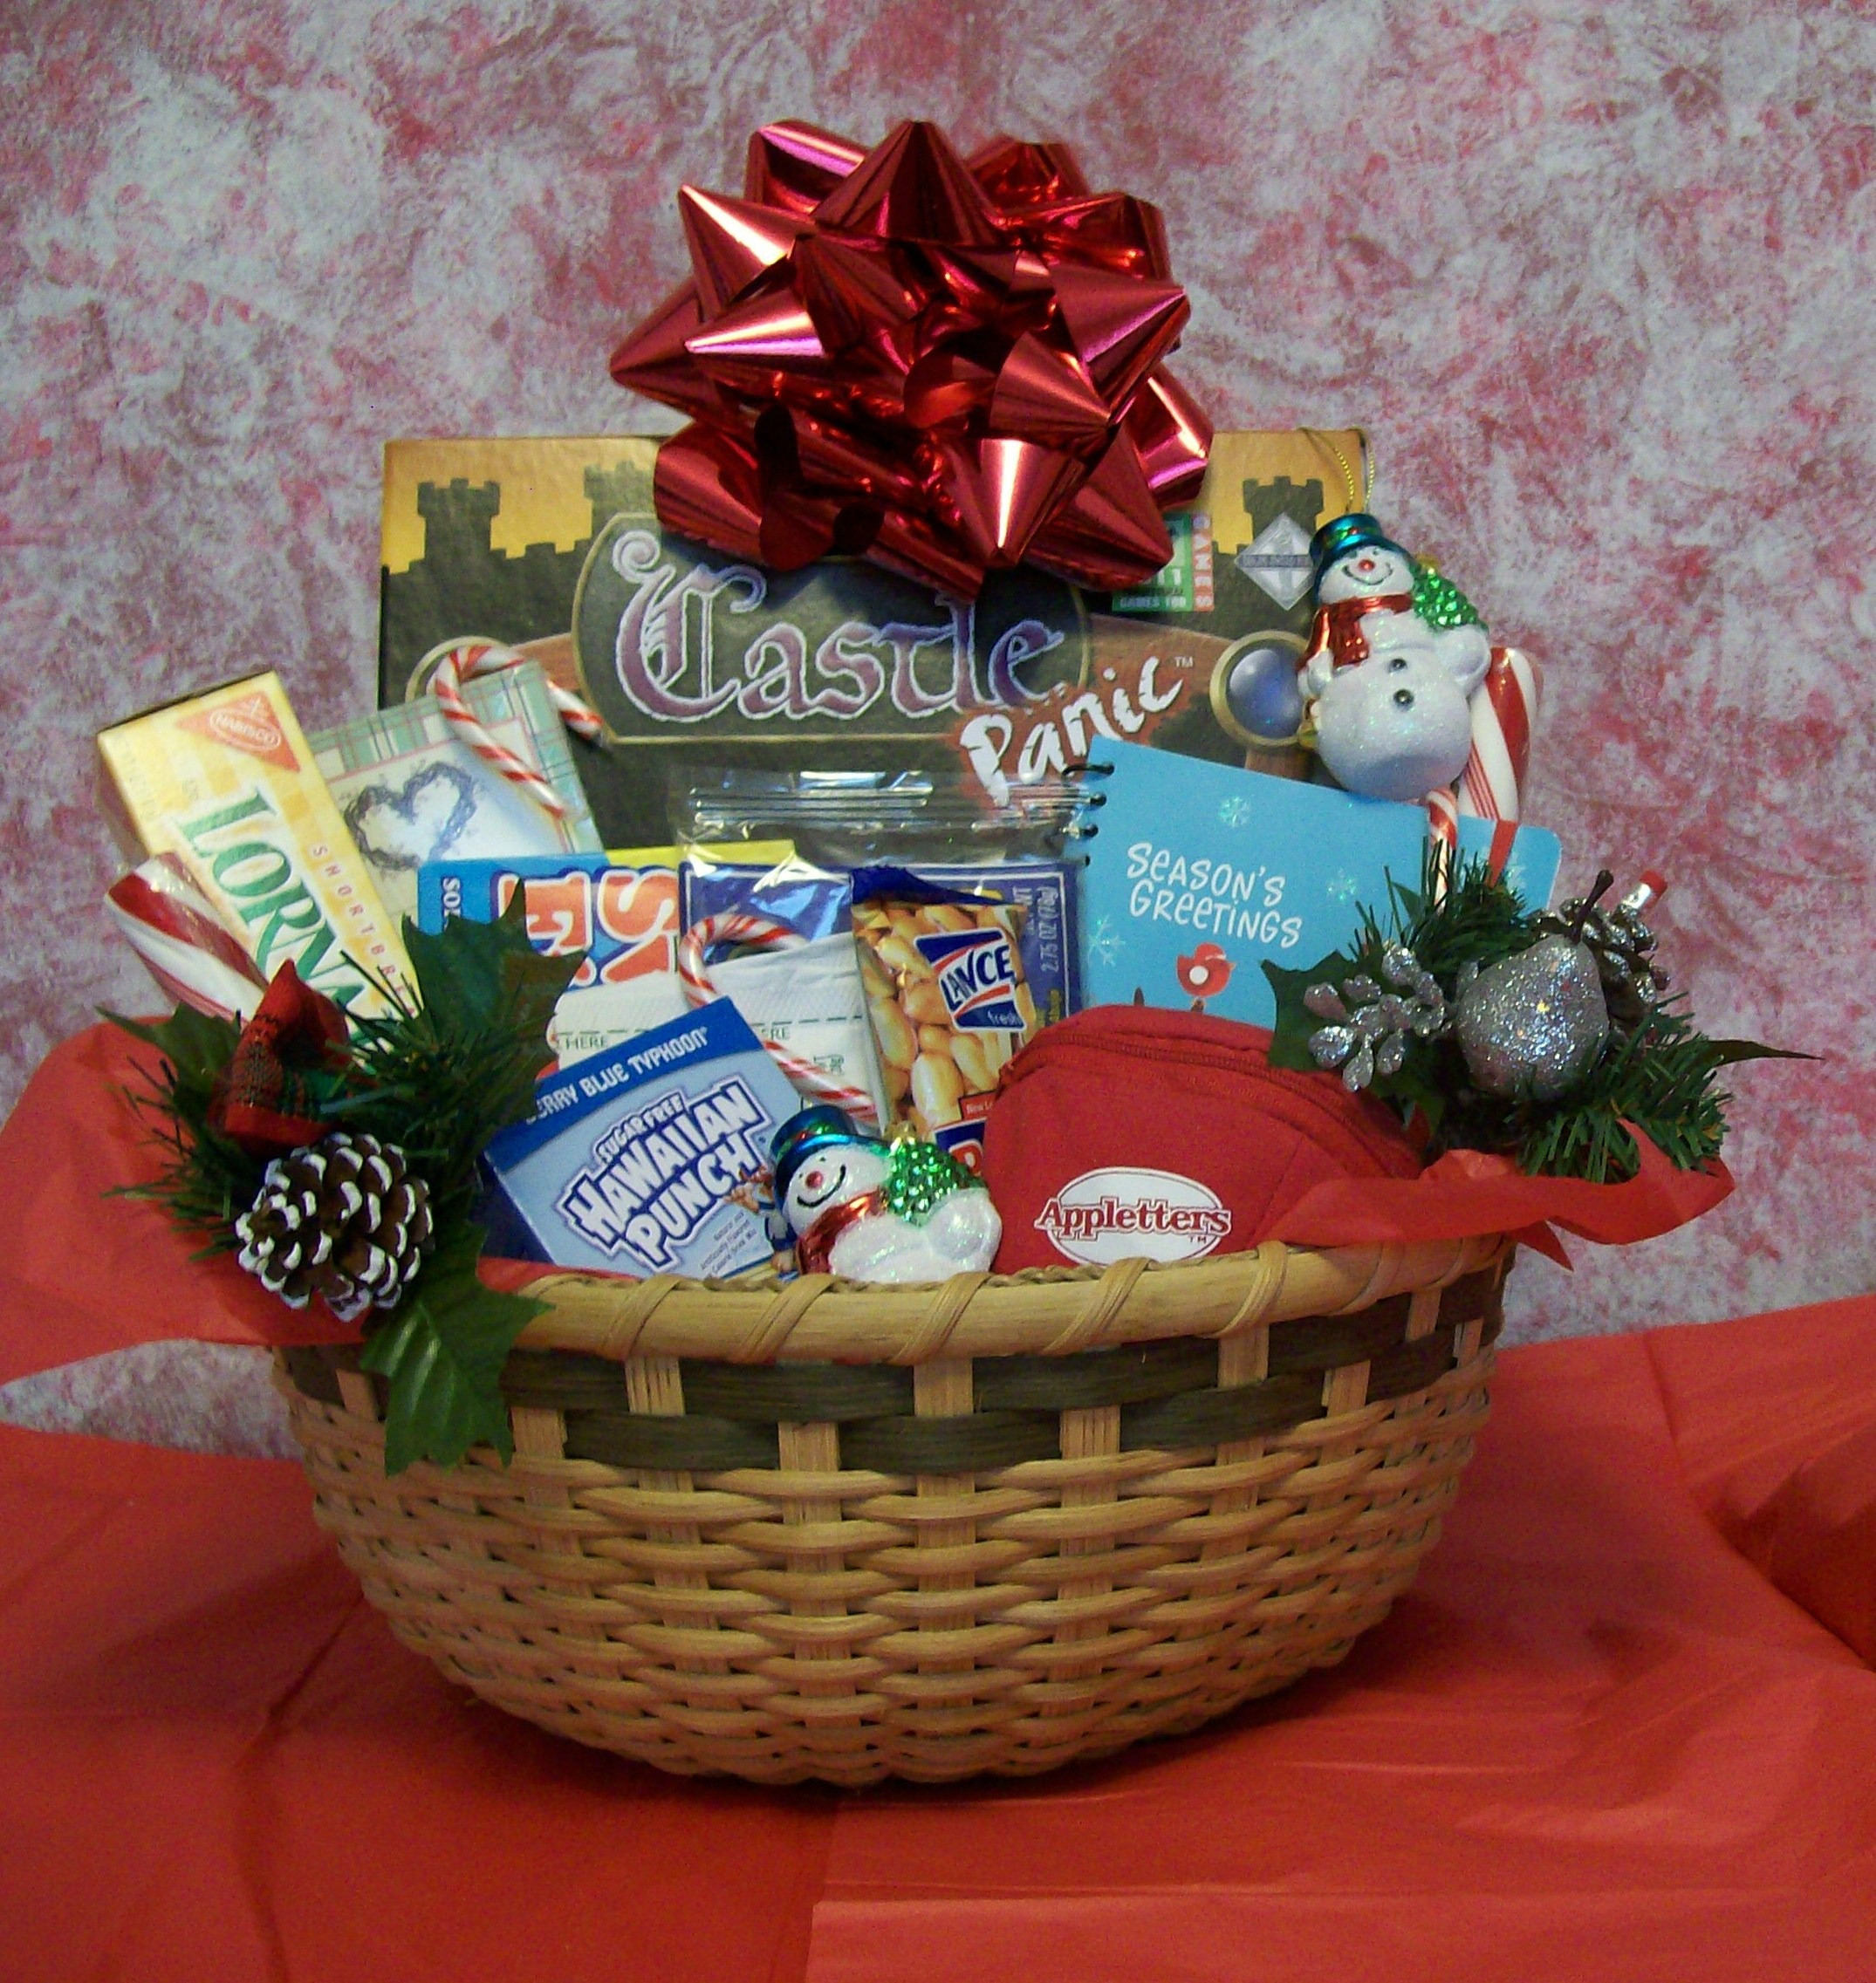 Gift Basket Ideas For Christmas
 Family Gift Ideas For Christmas